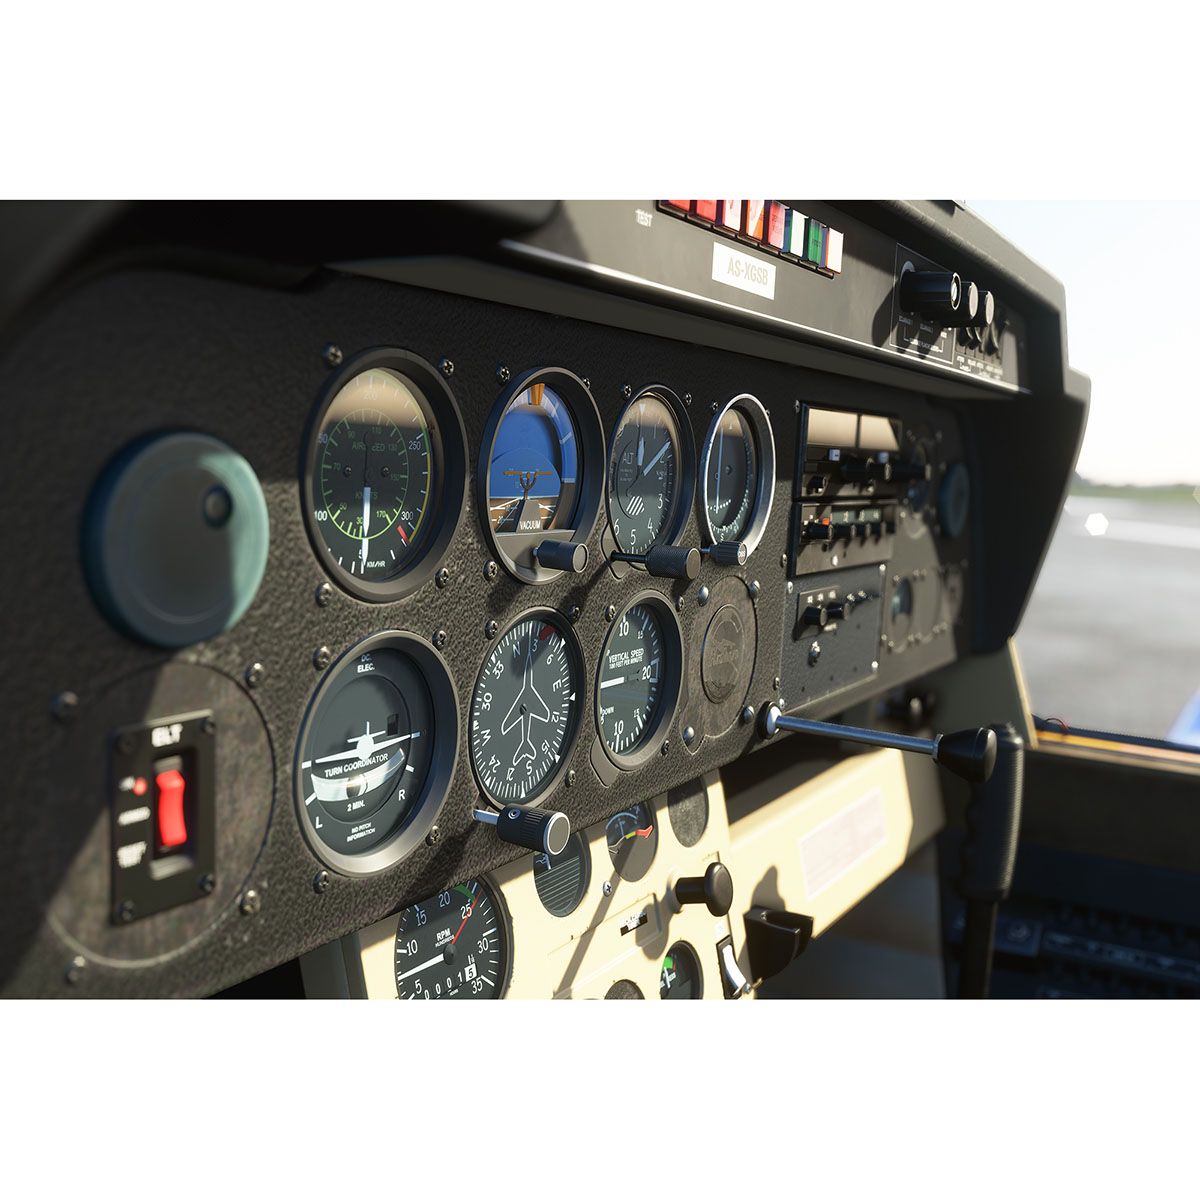 Anschnallen bitte – Wir verlosen den Microsoft Flight Simulator